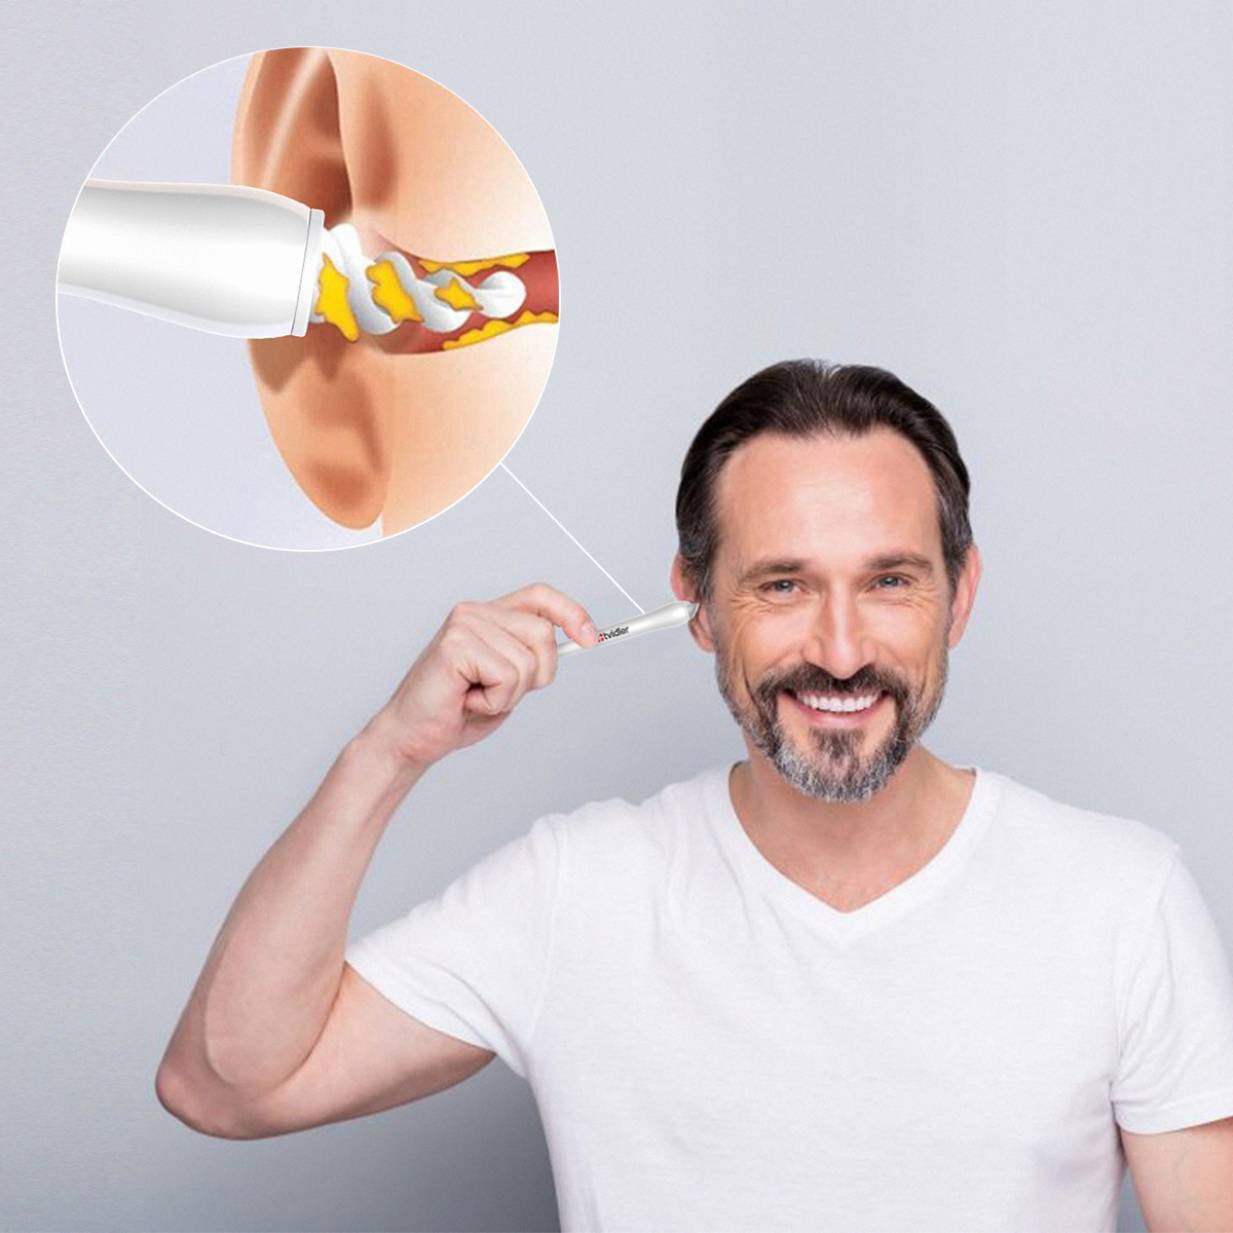 Ear Wax Removal Tvidler Amazon